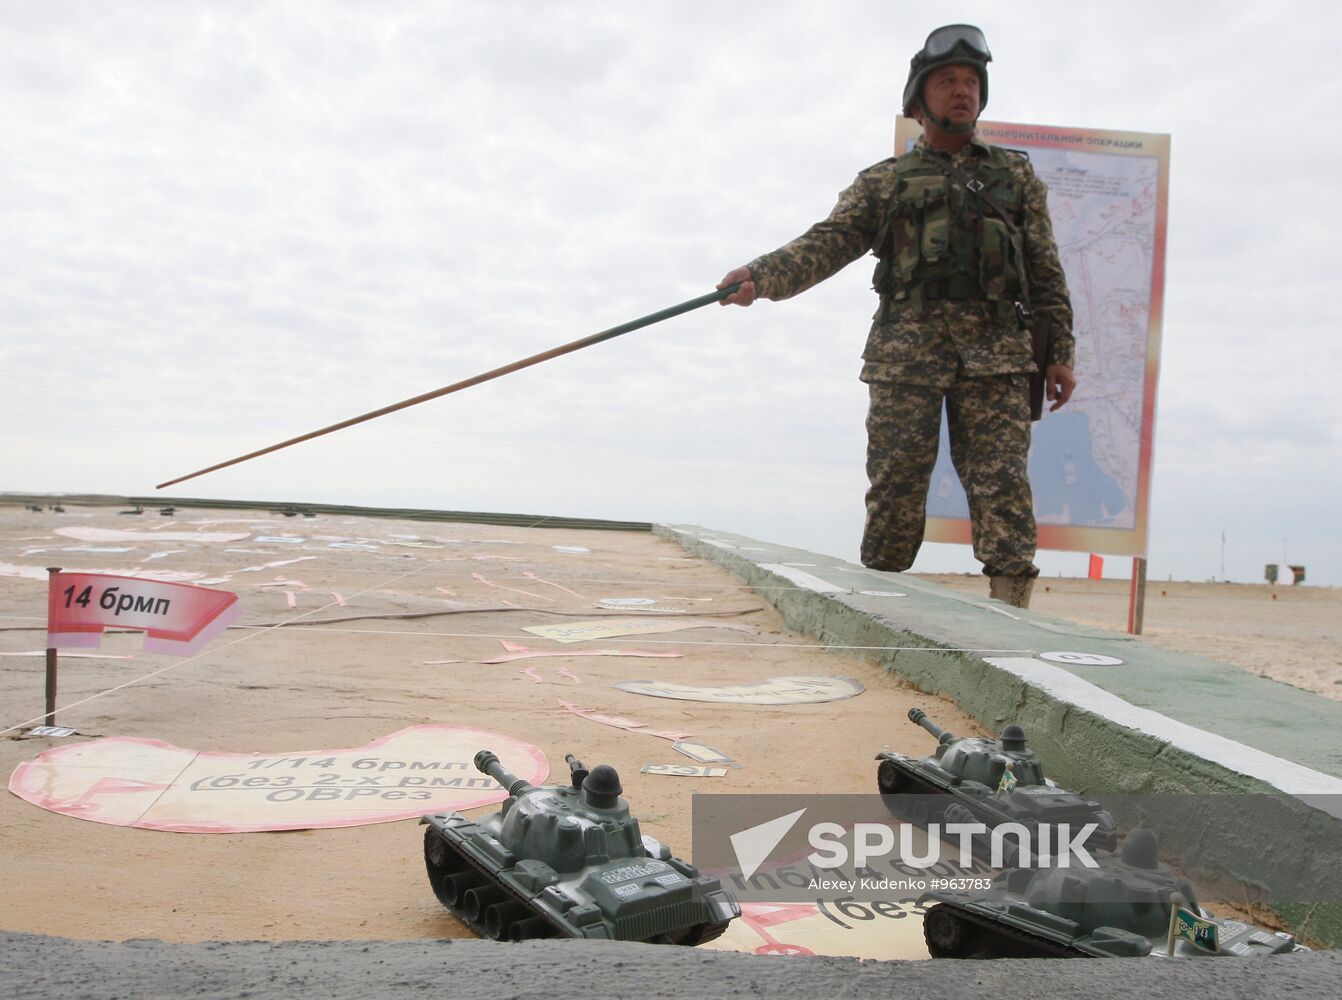 Large-scale Center-2011 strategic exercises in Kazakhstan